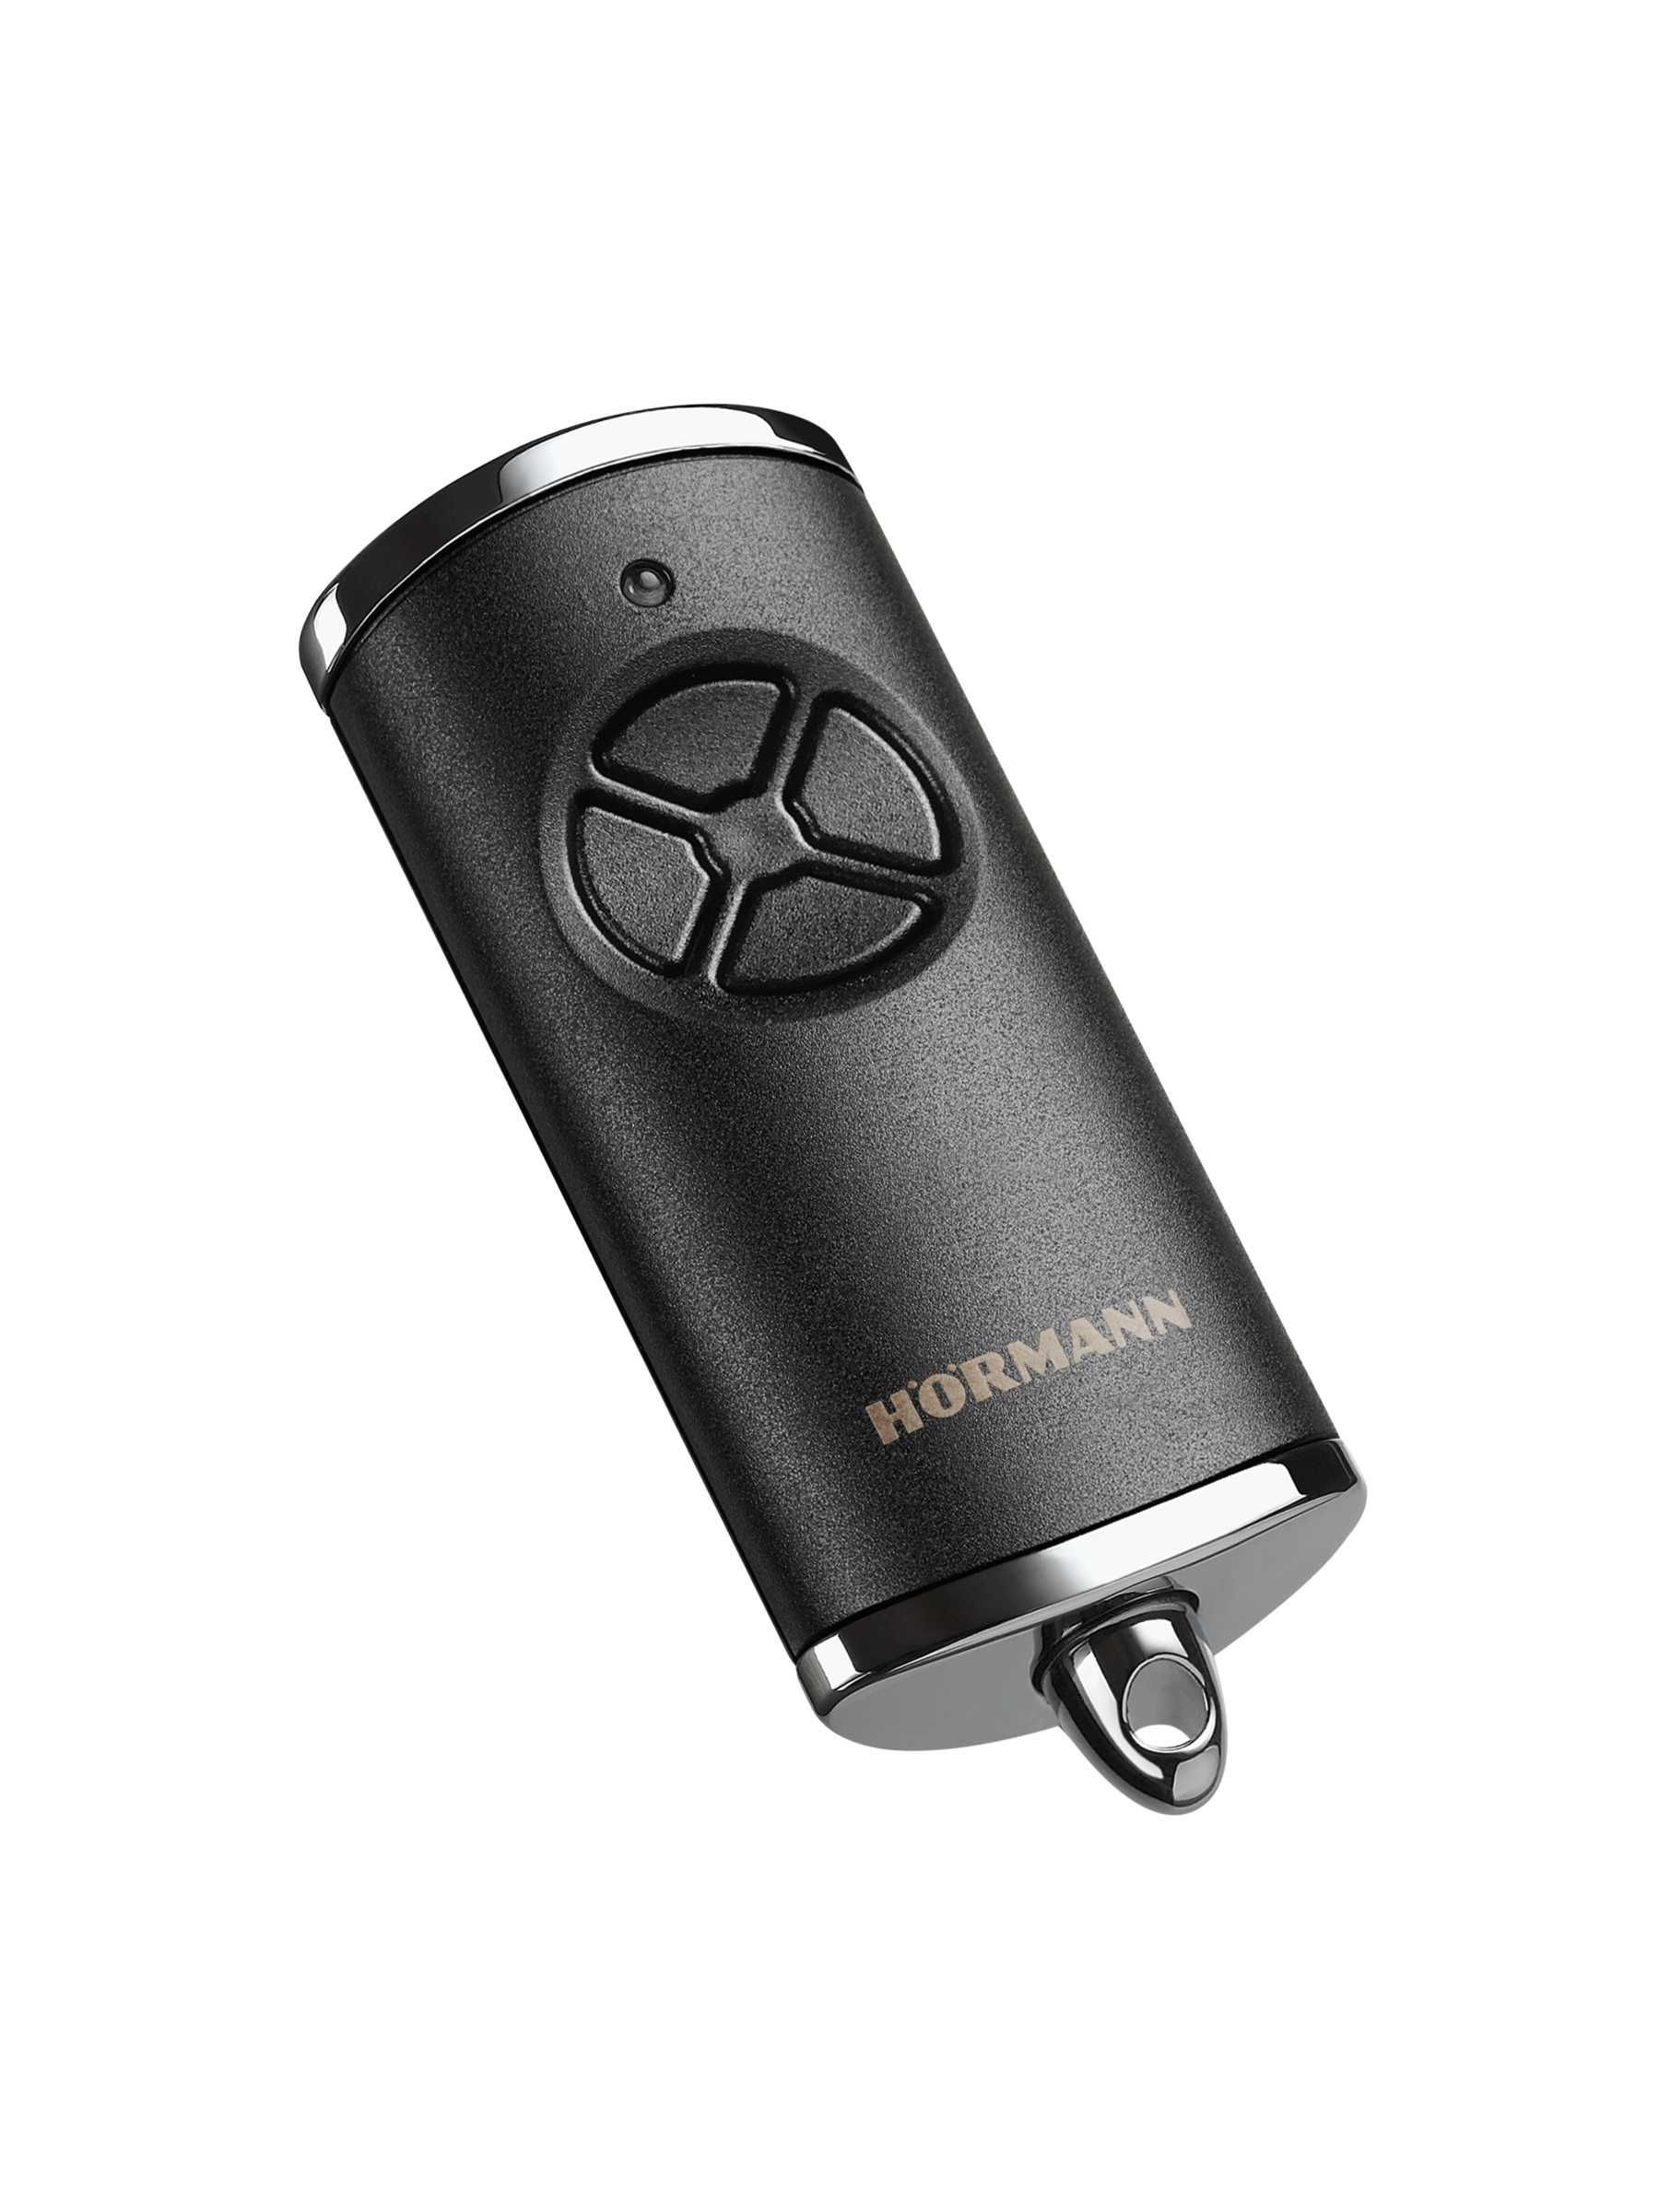 Hörmann Handsender HSE 4 BS  (BiSecur-Technologie), Chrom-Kappe schwarz